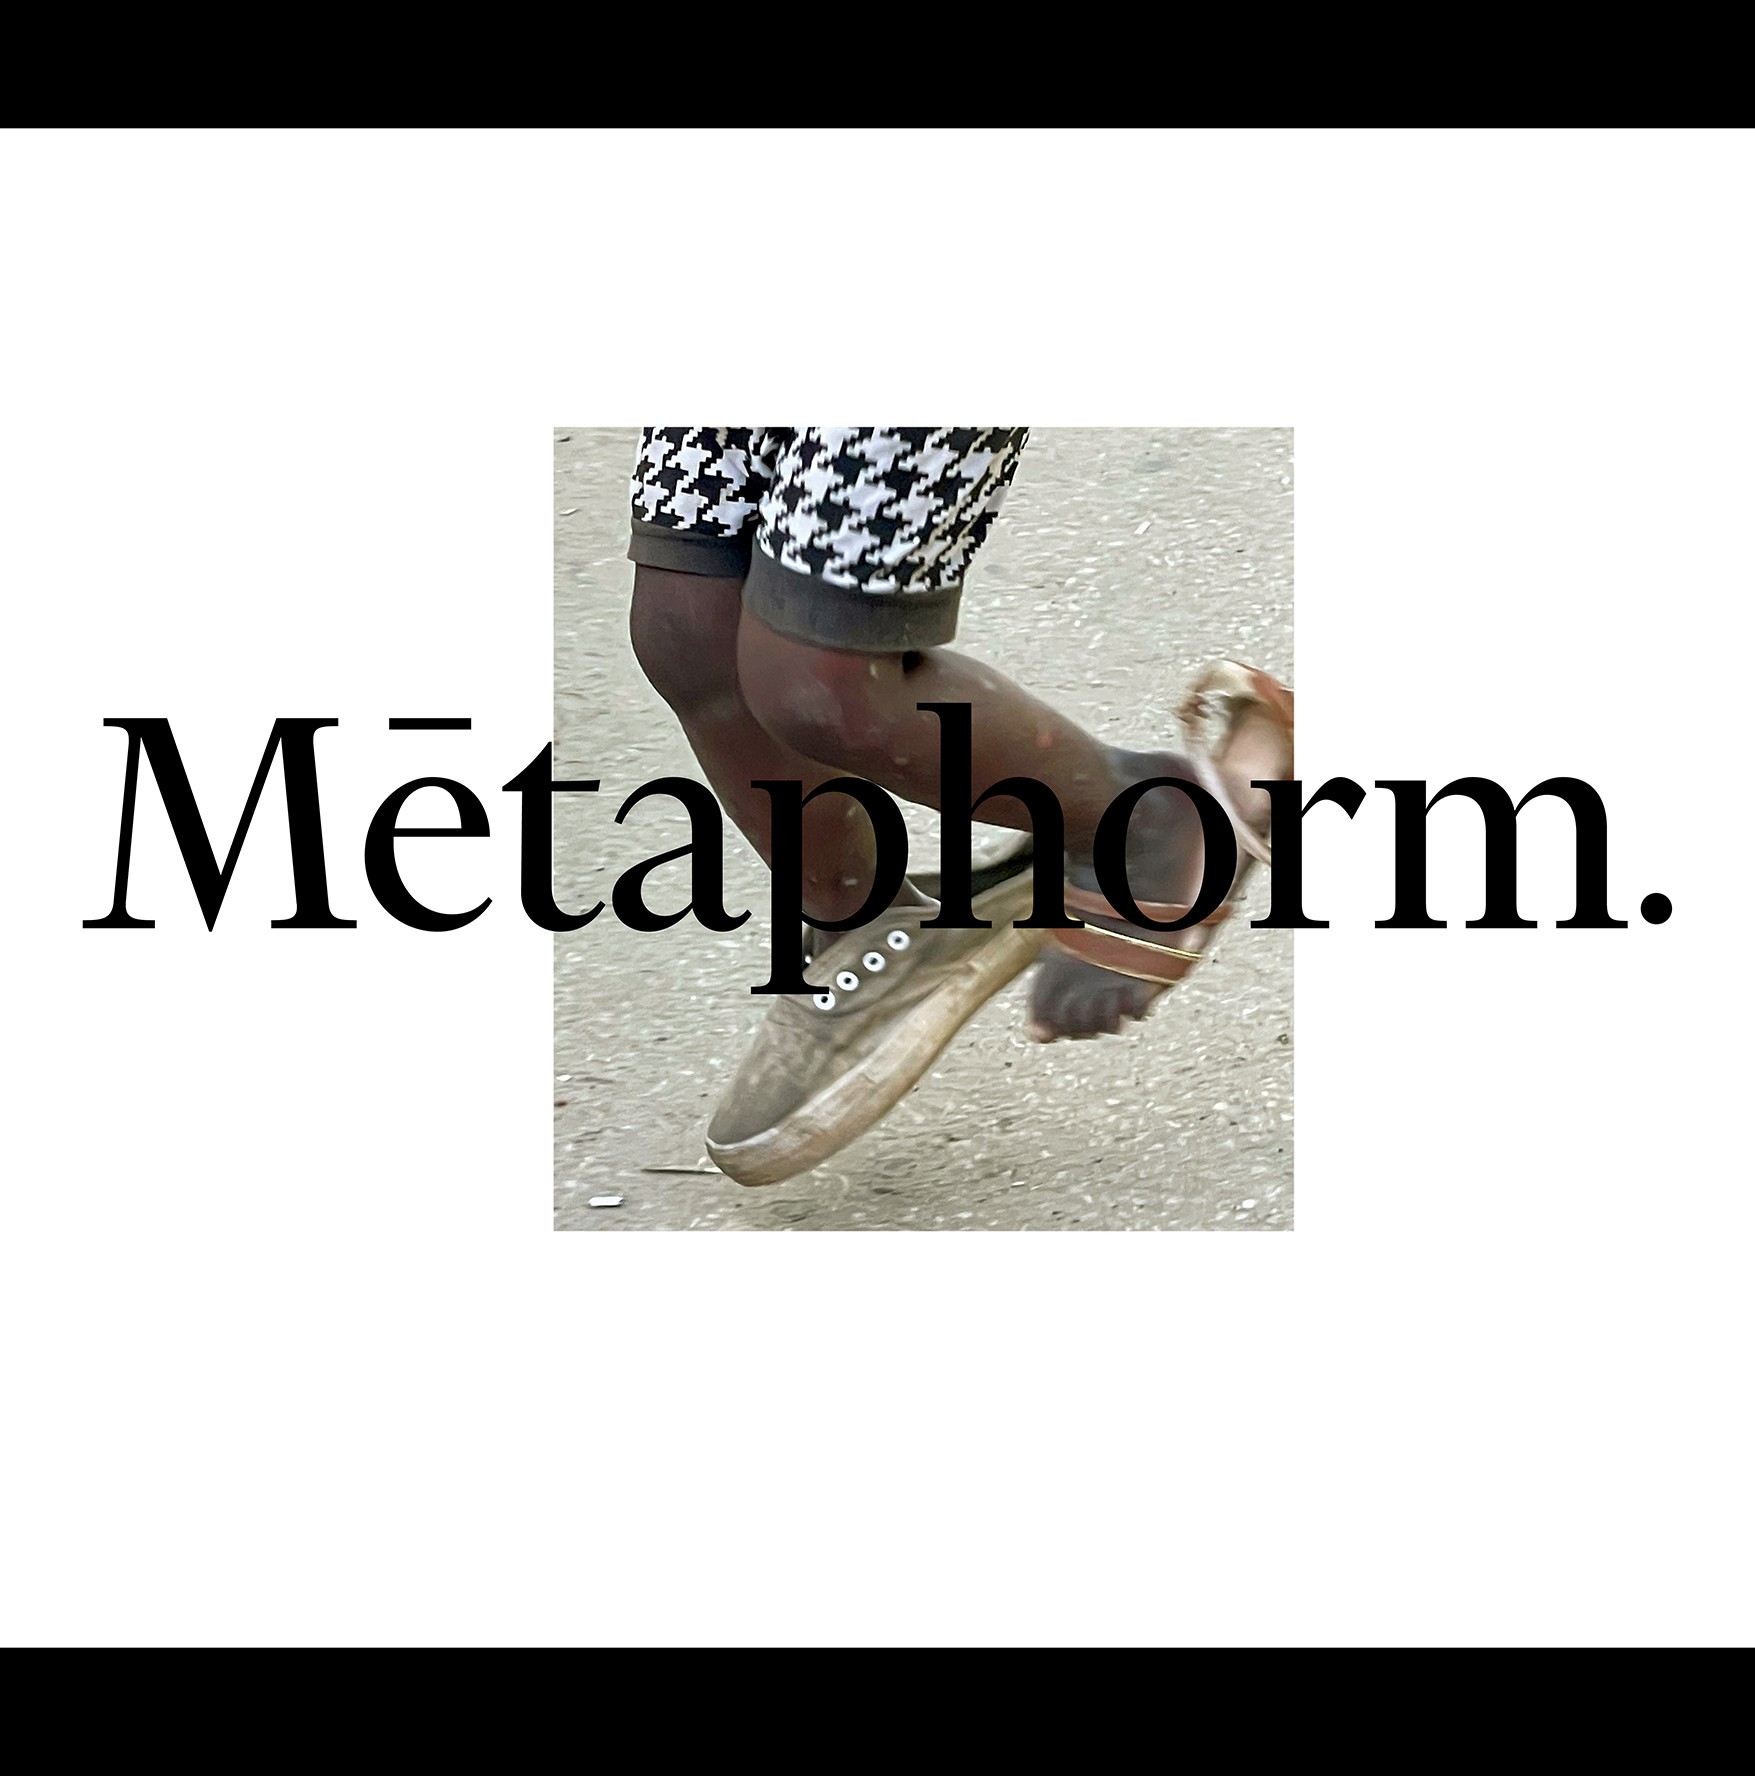 Metaphorm magazine